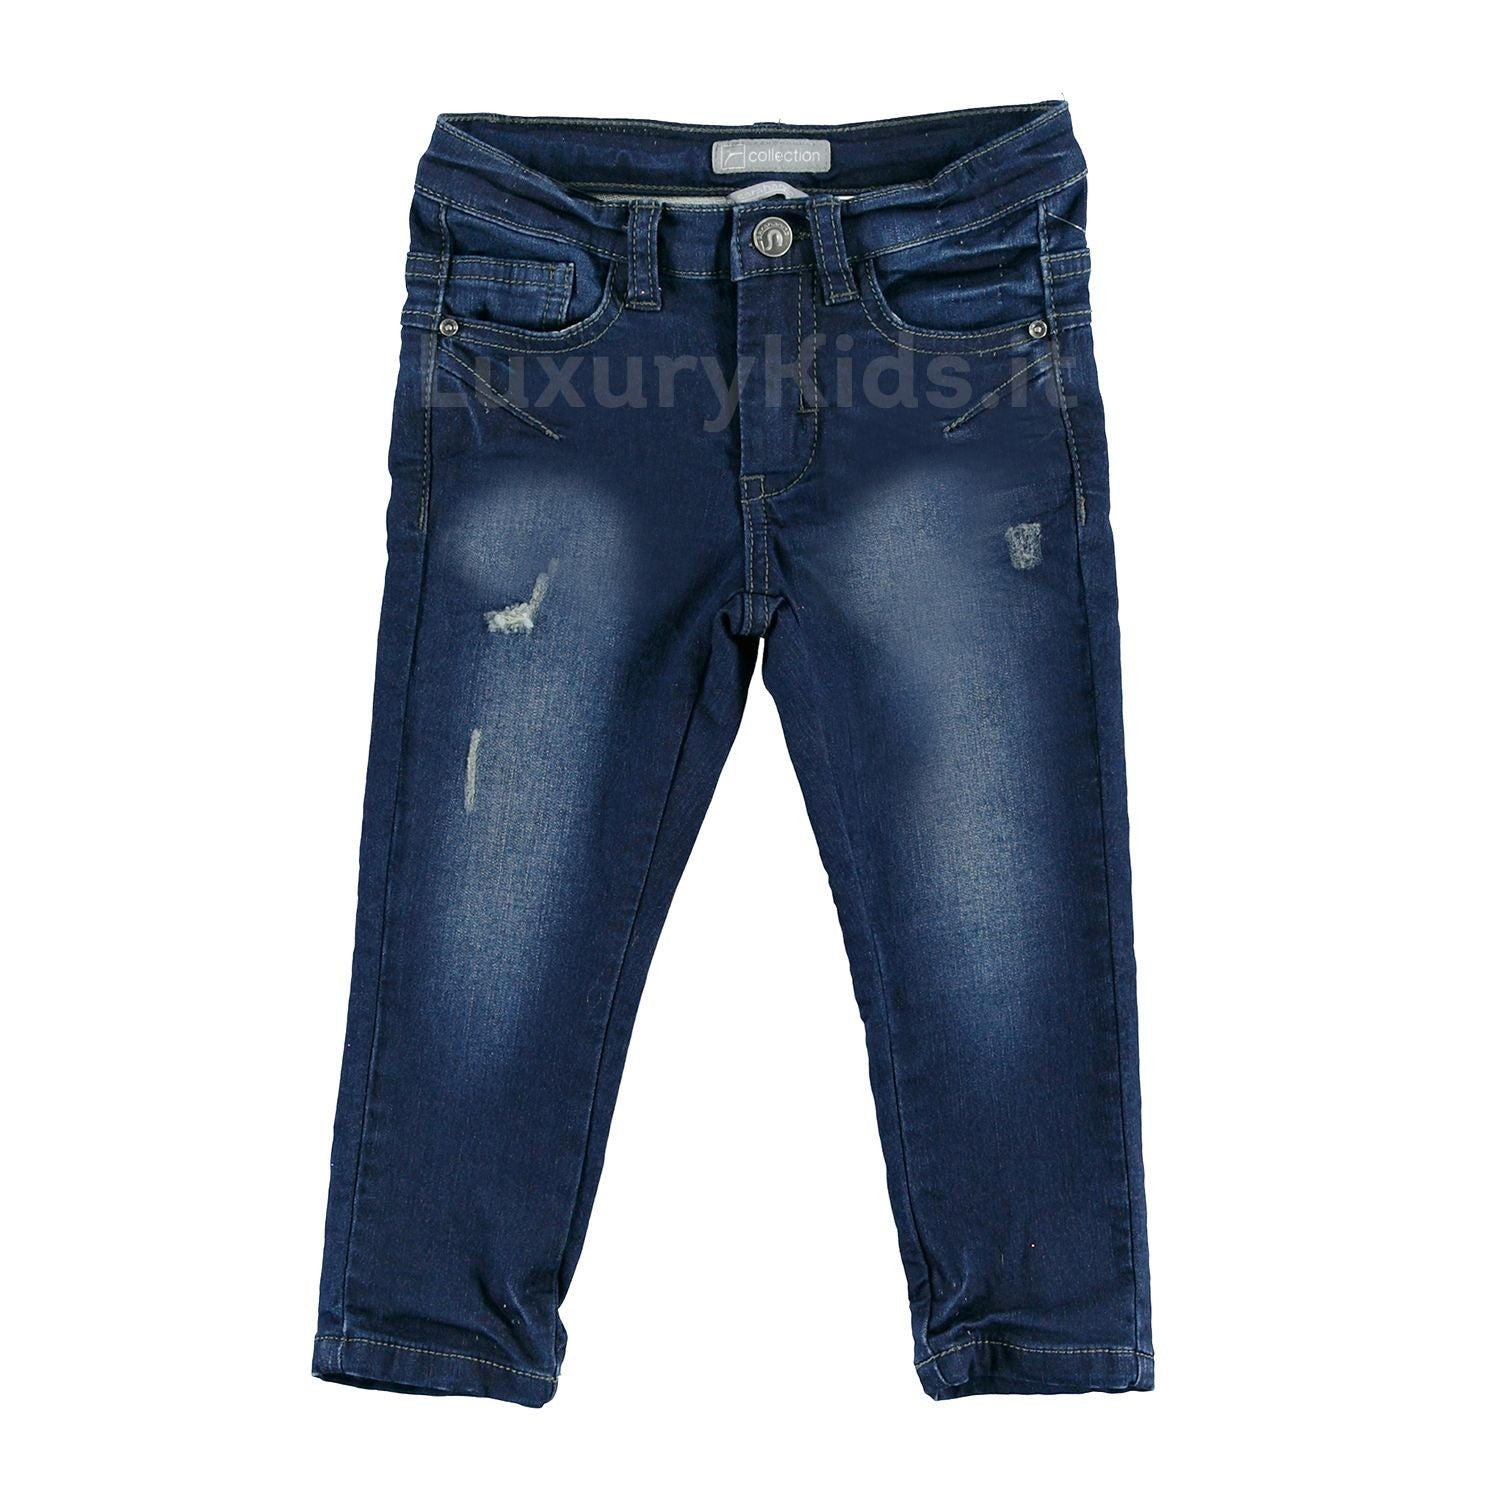 Jeans Modello 5 Tasche con Rotture Denim Bambino Sarabanda V155 - SARABANDA - LuxuryKids